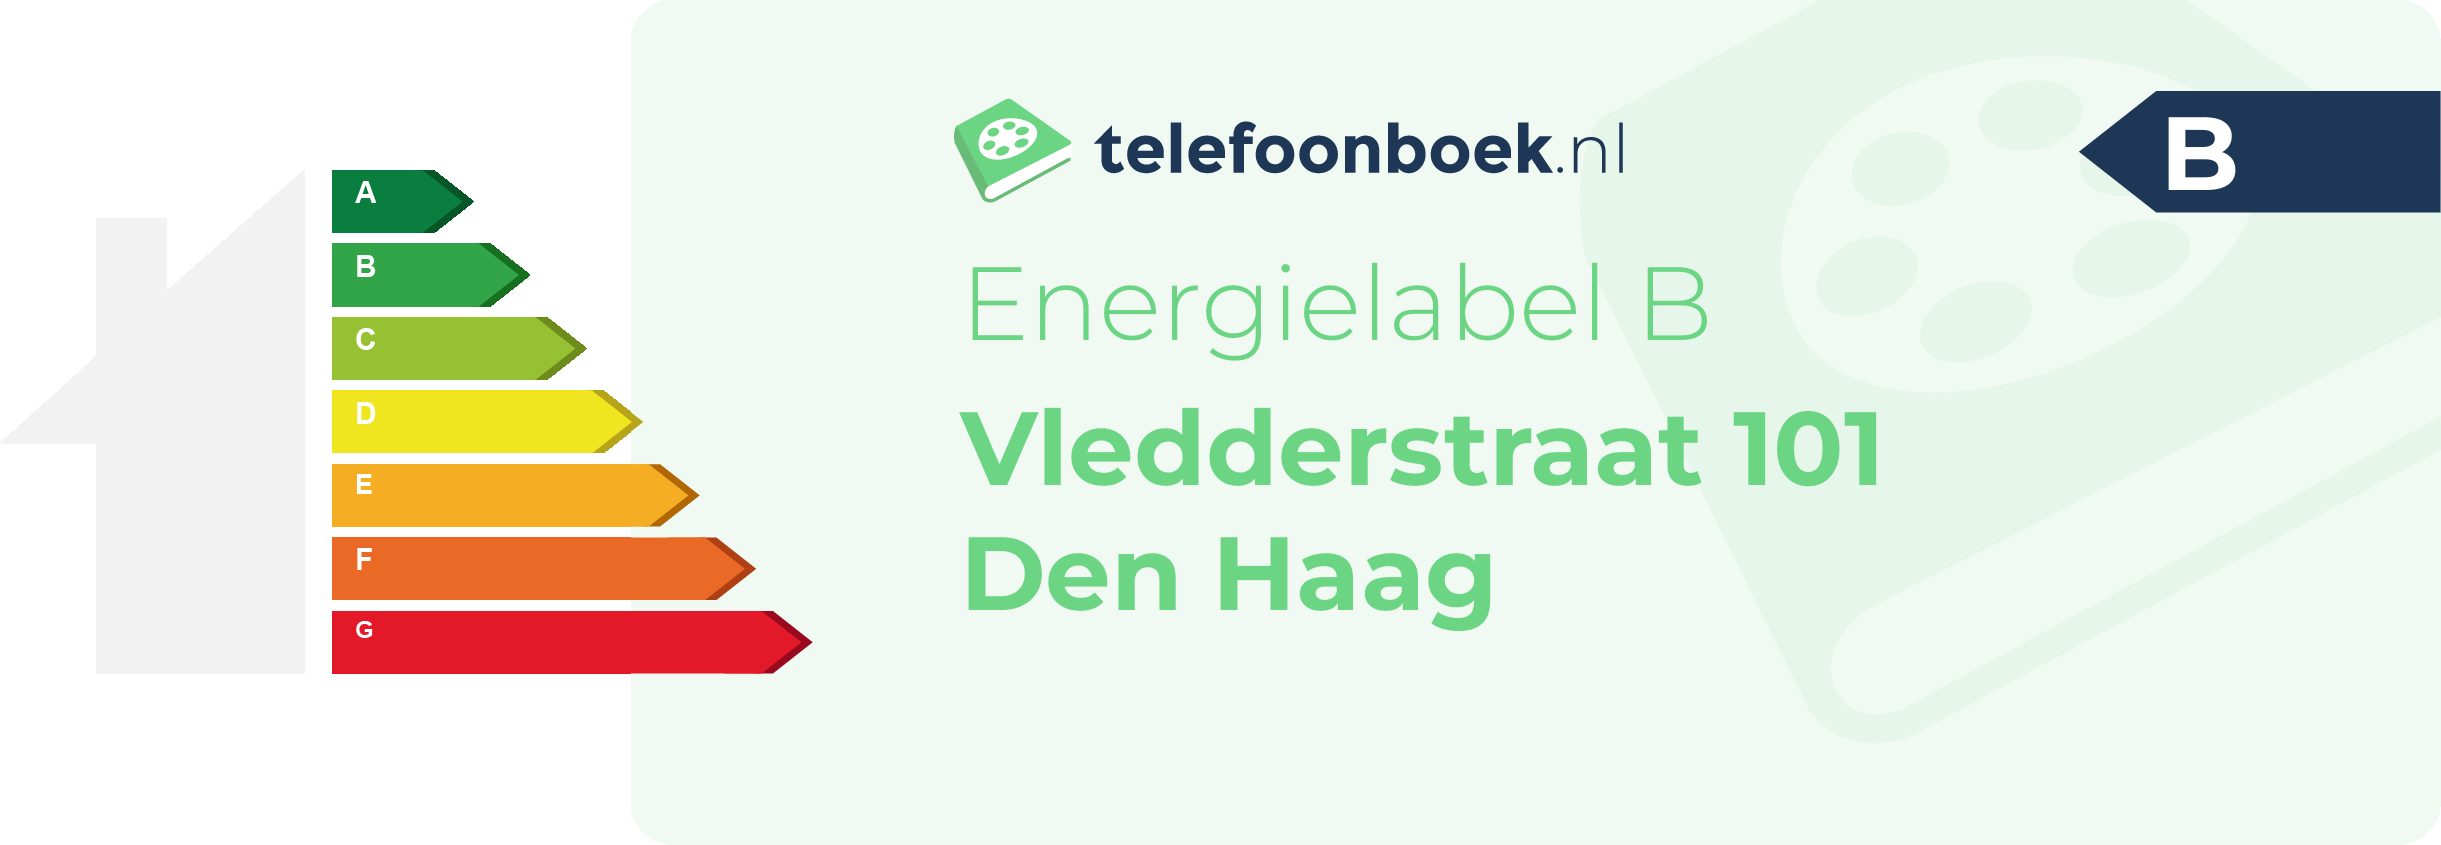 Energielabel Vledderstraat 101 Den Haag